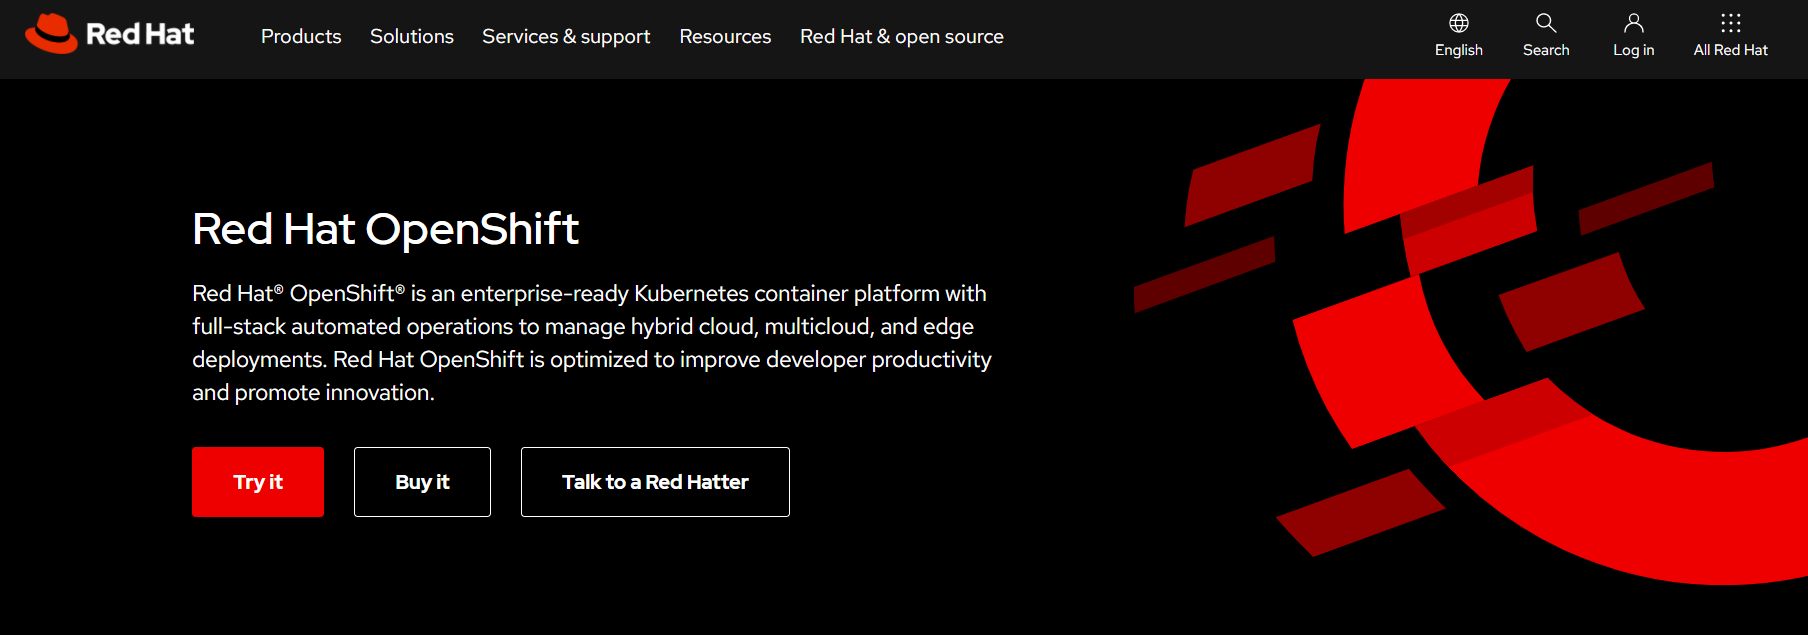 Red Hat OpenShift - Kubernetes Container Platform